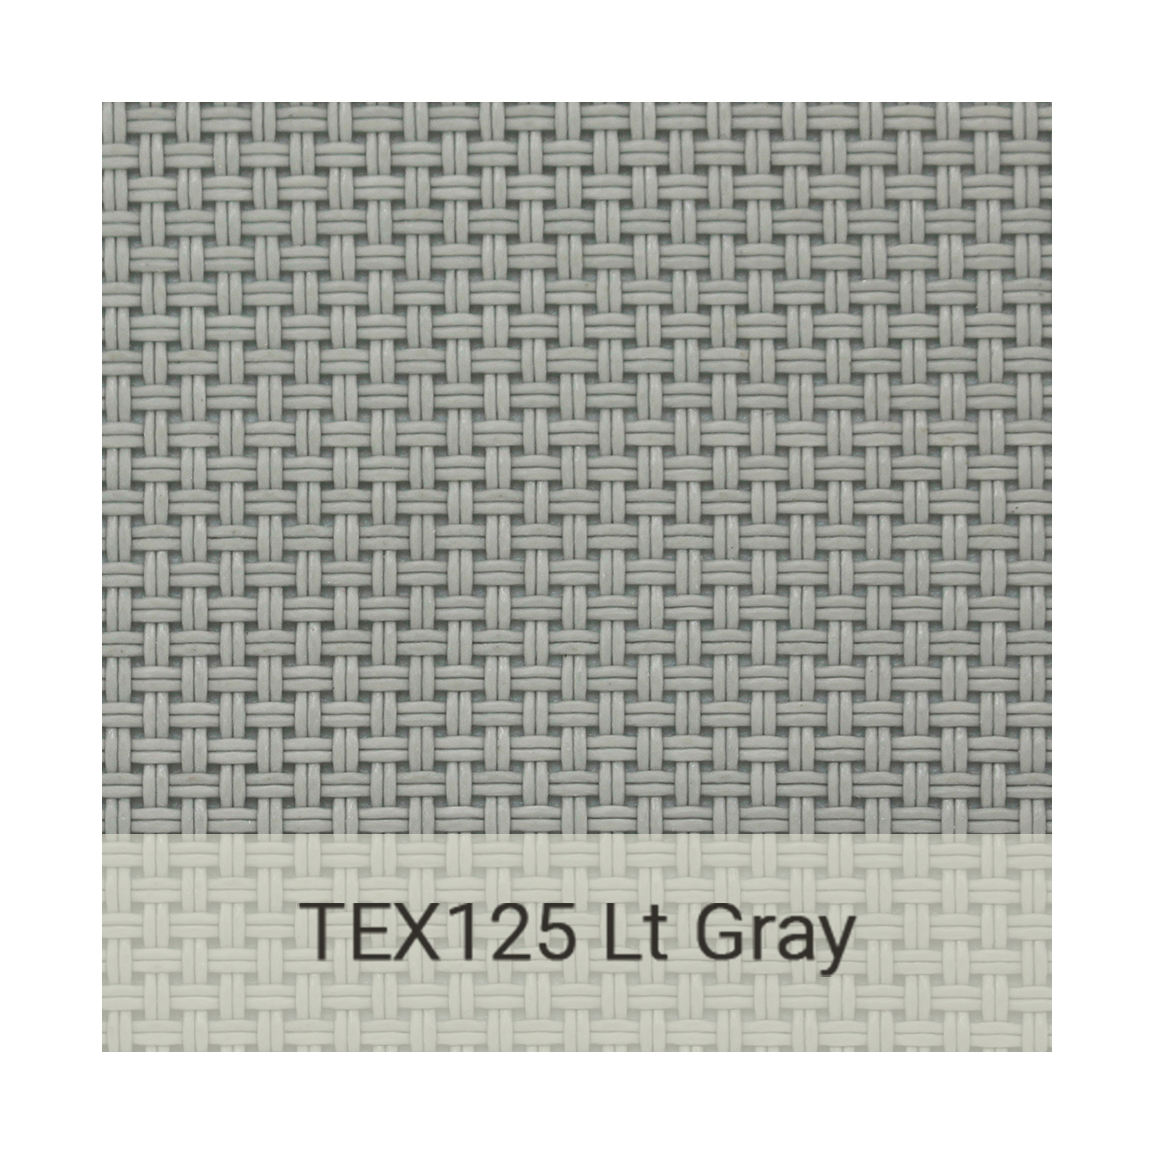 Kingston Casual textiline-tex125-light-gray